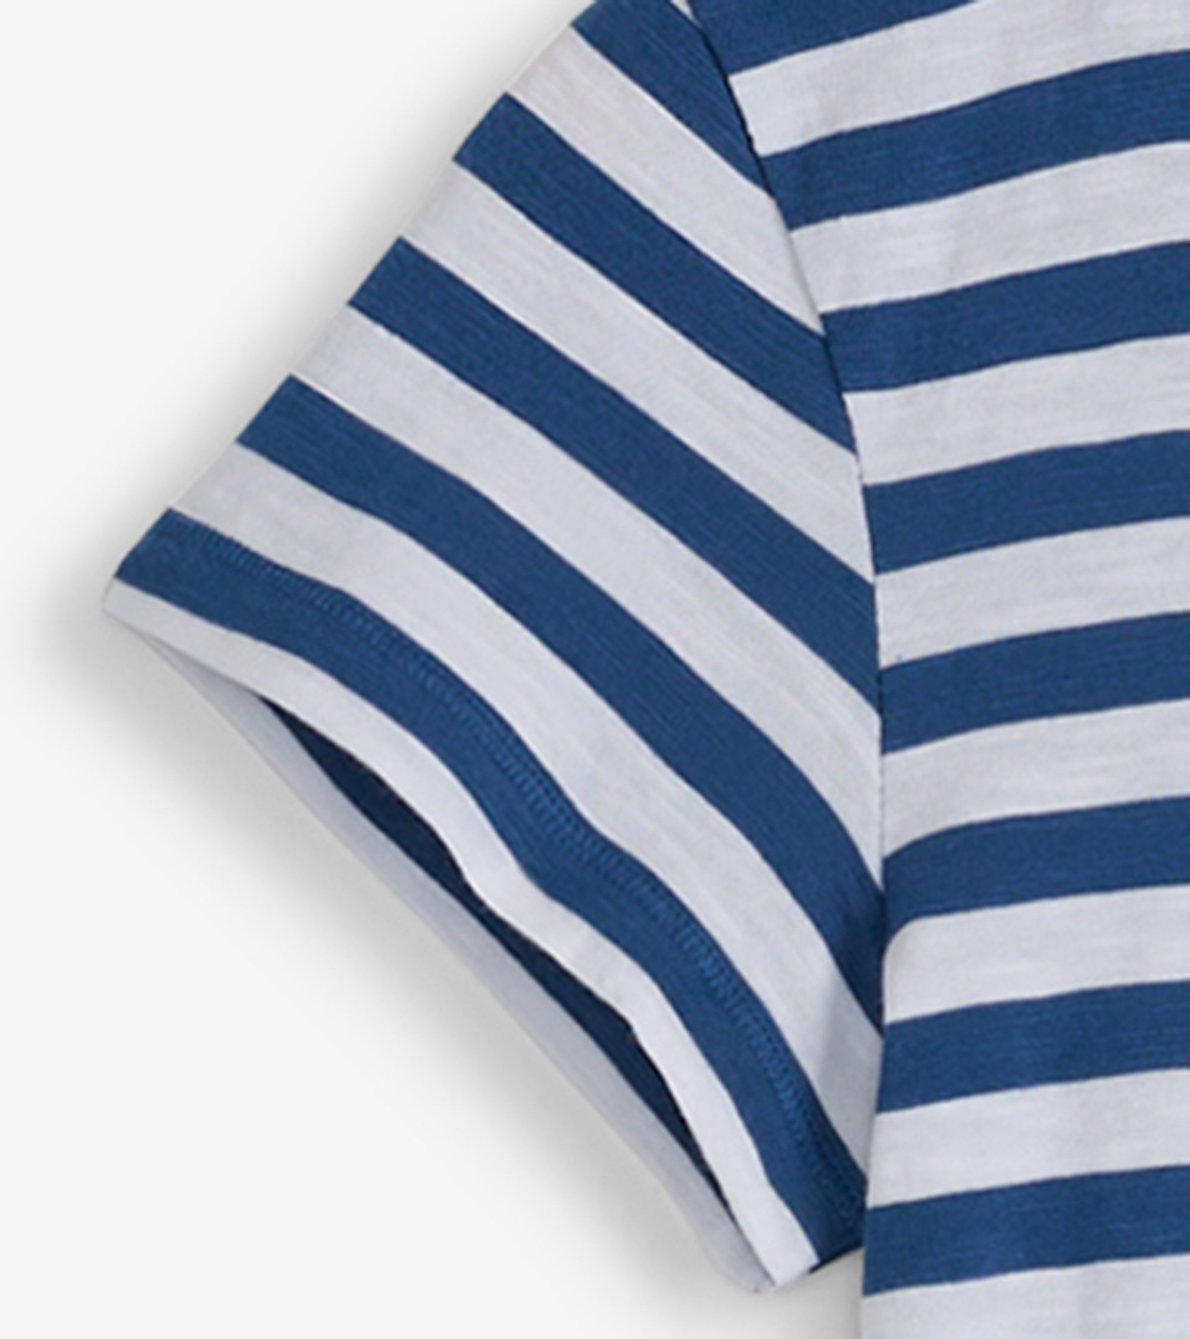 View larger image of Women's Nautical Stripes Crew Neck T-Shirt Dress